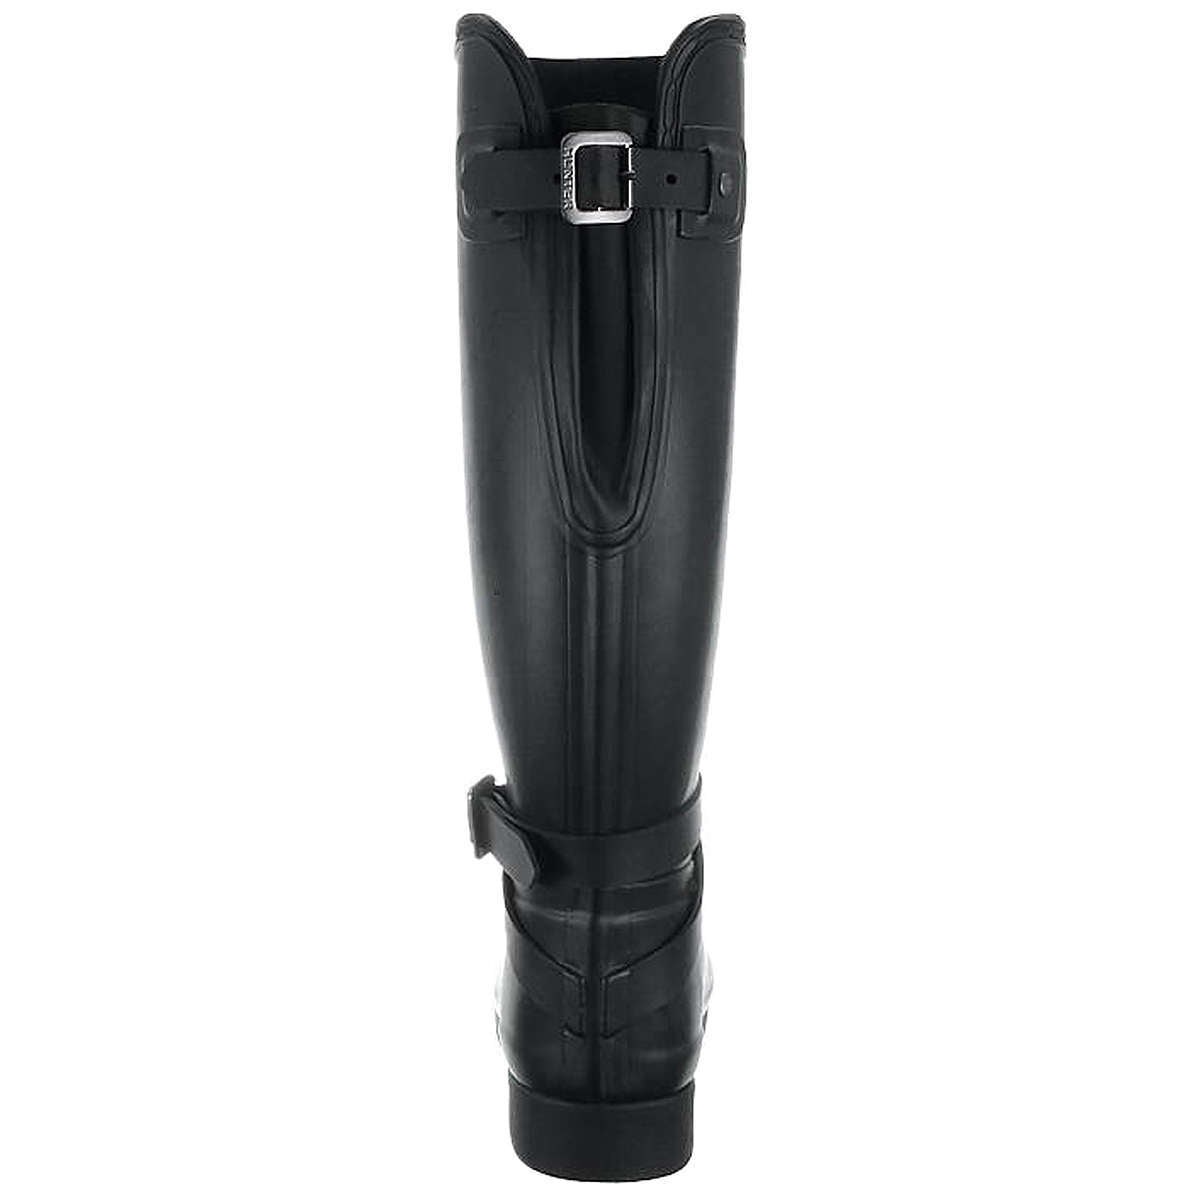 Hunter Refined Rubber Adjustable Women's Tall Wellington Boots#color_black